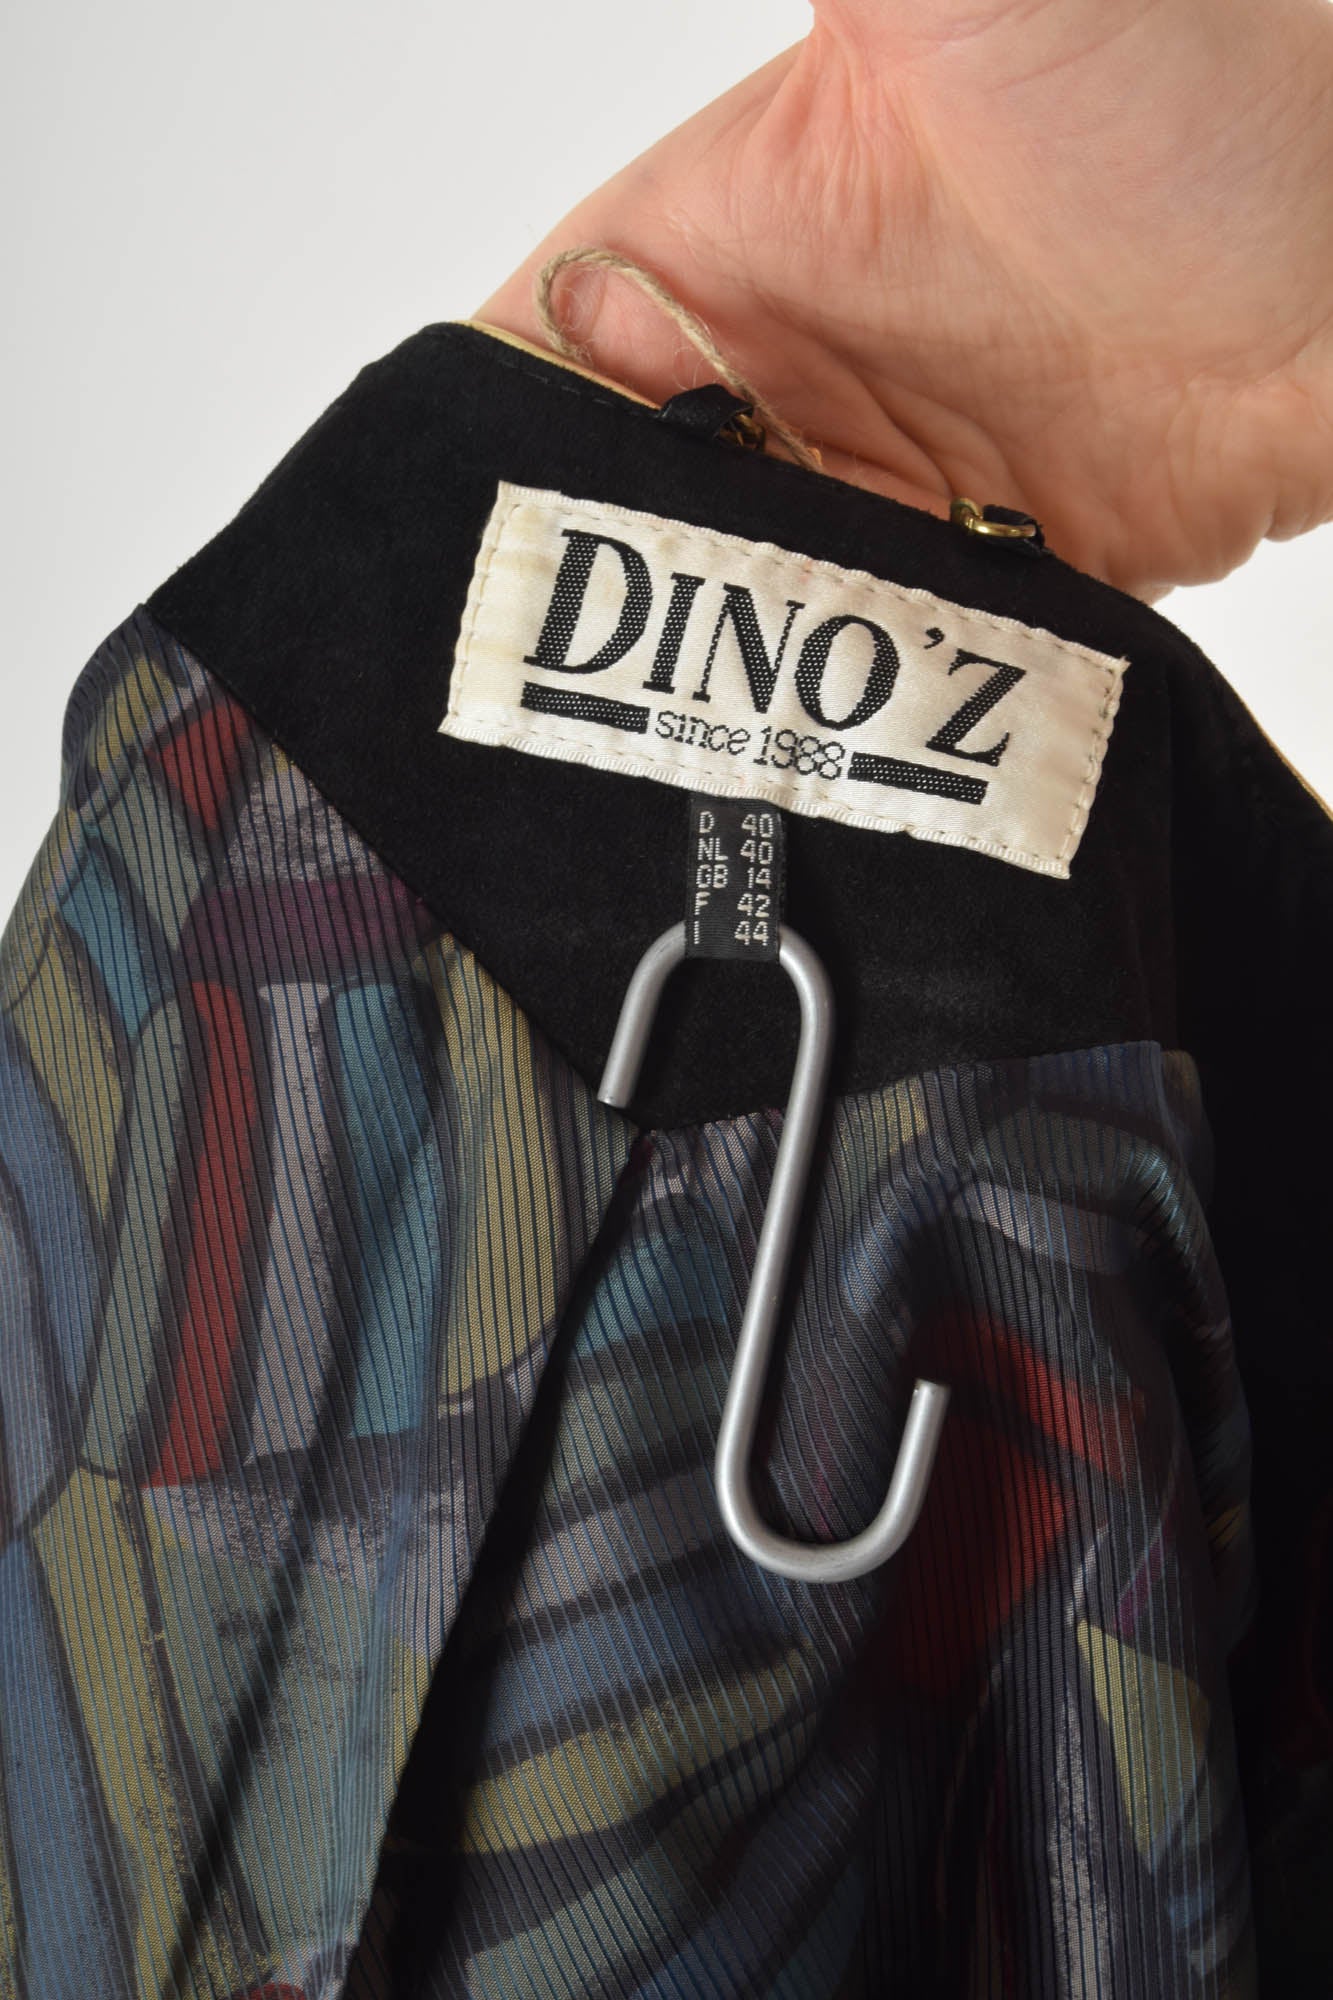 RARE 80s Dino'z Vintage Leather Jacket 